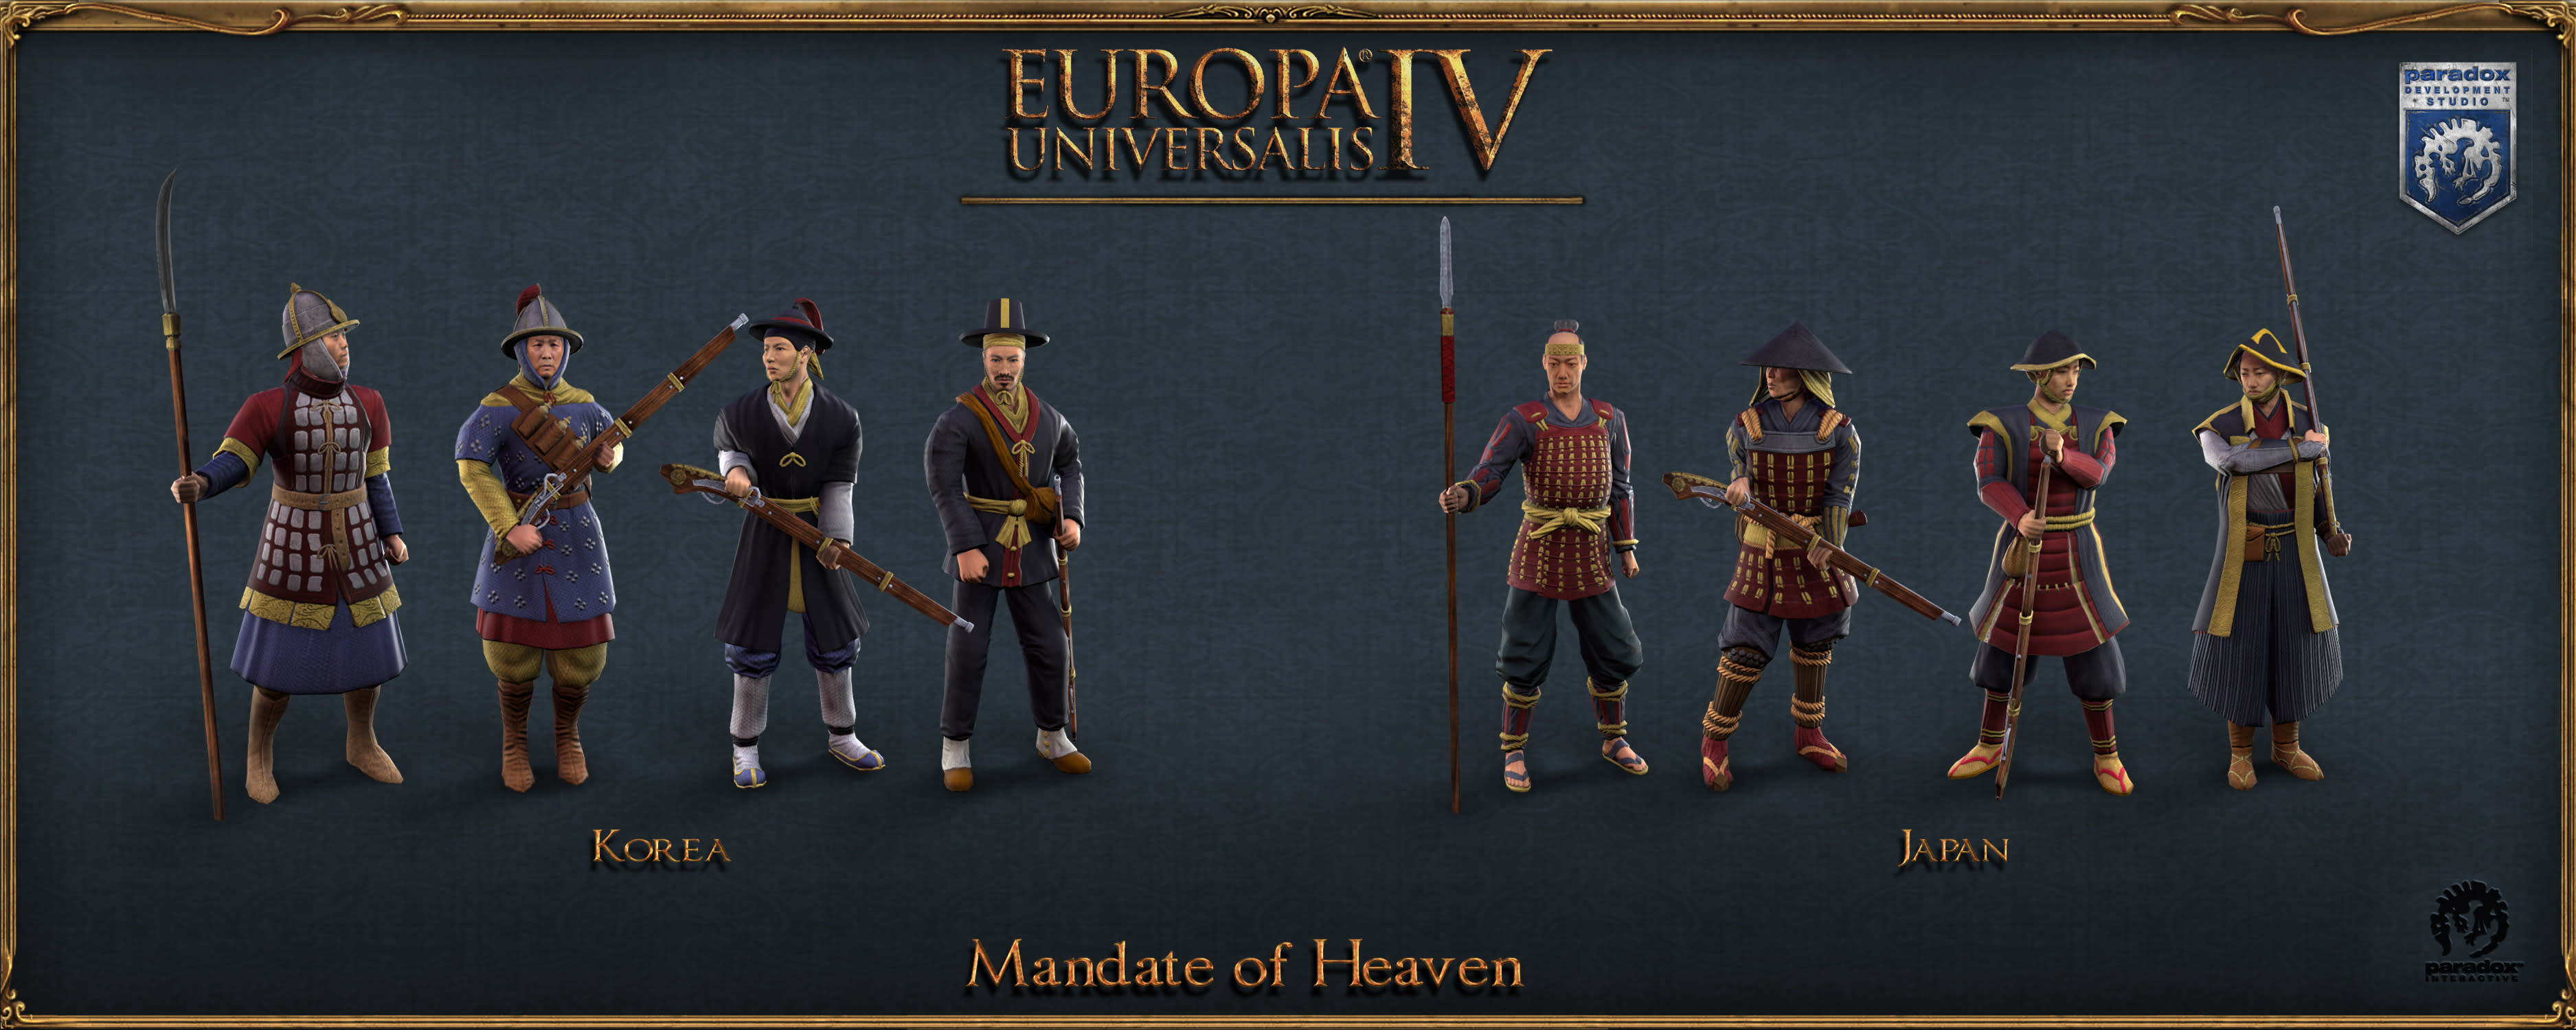 Europa Universalis IV: Mandate of Heaven Content Pack (screenshot 3)